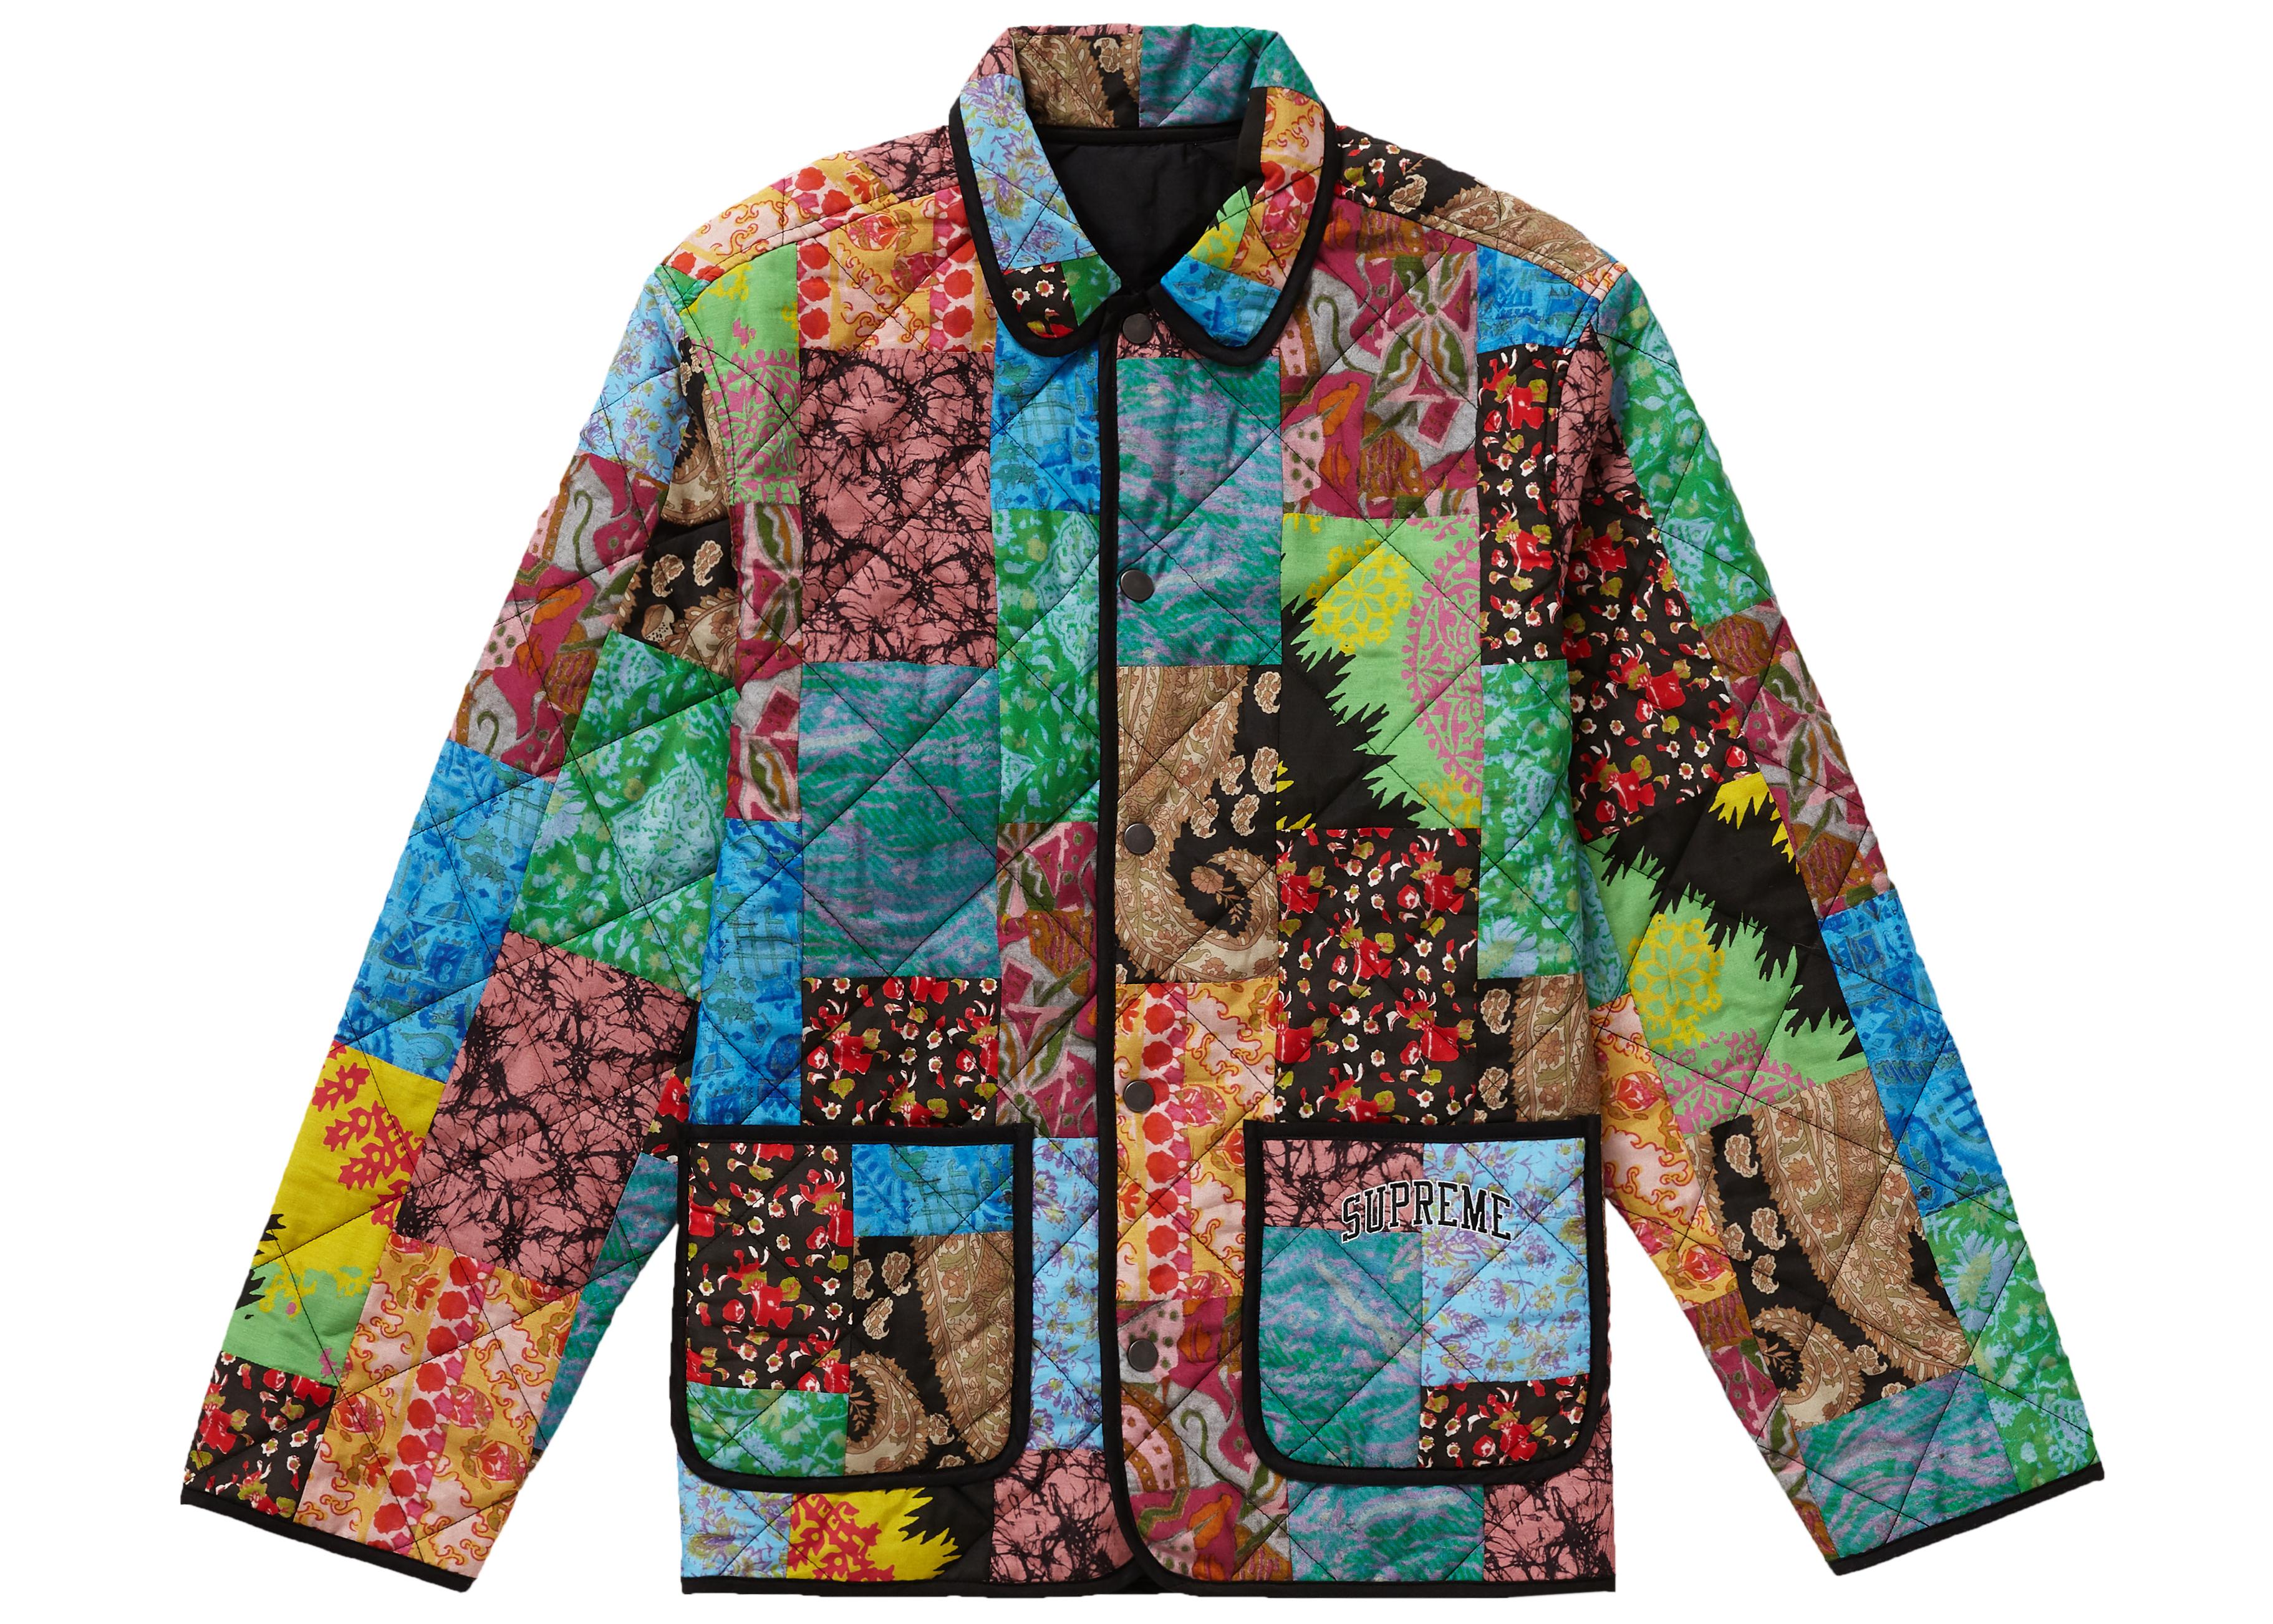 Supreme Reversible Patchwork Quilted Jacket Multicolor for Men - Lyst